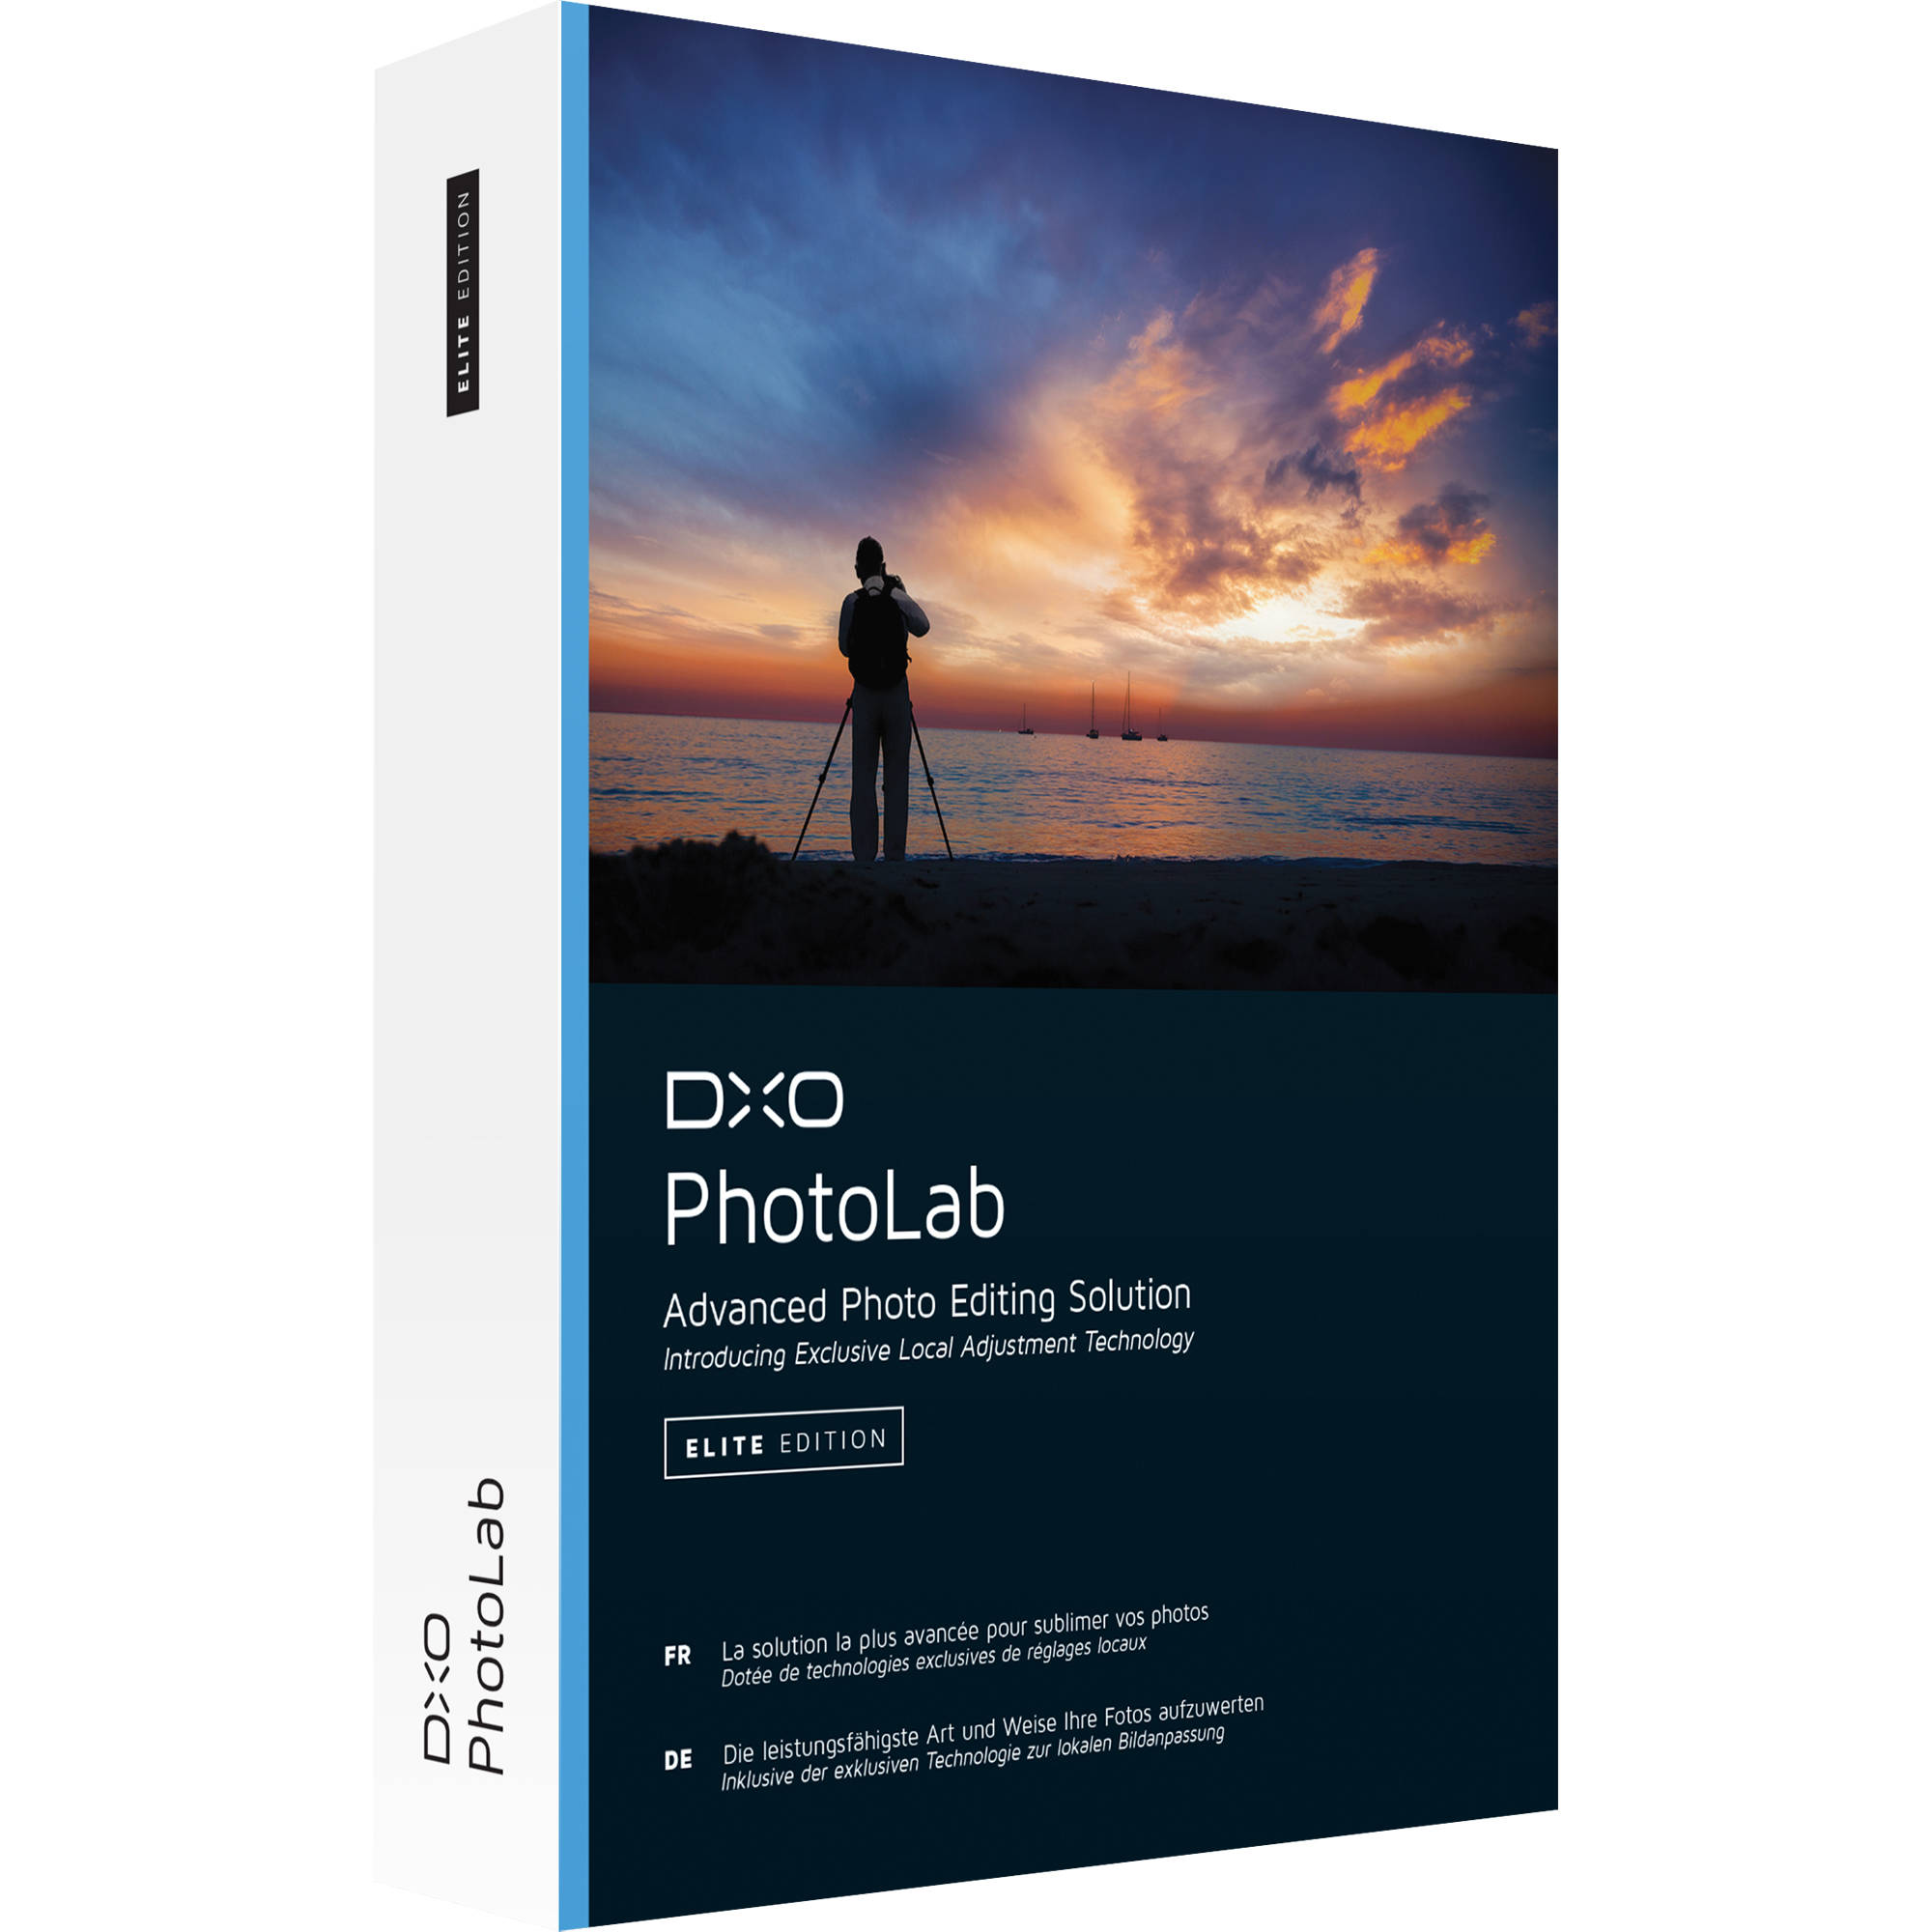 DxO PhotoLab 1.2 descargar photolab dxo mega gratis